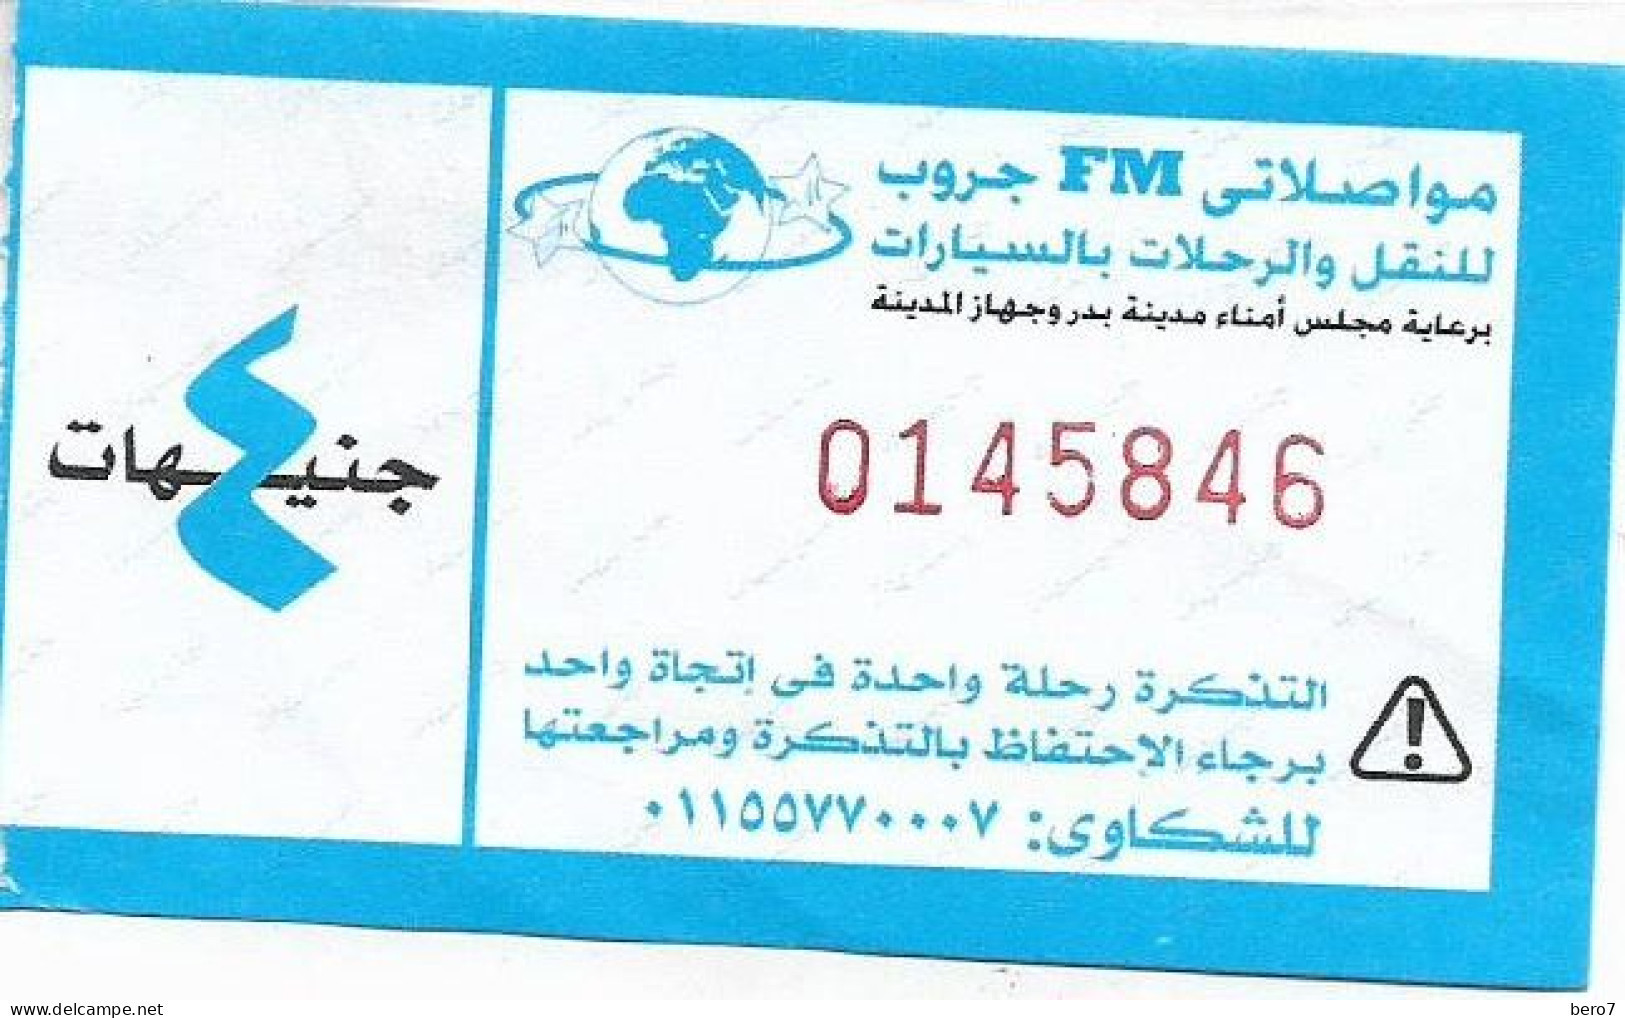 EGYPT Transportation Ticket  (Egypte) (Egitto) (Ägypten) (Egipto) (Egypten) - Mundo